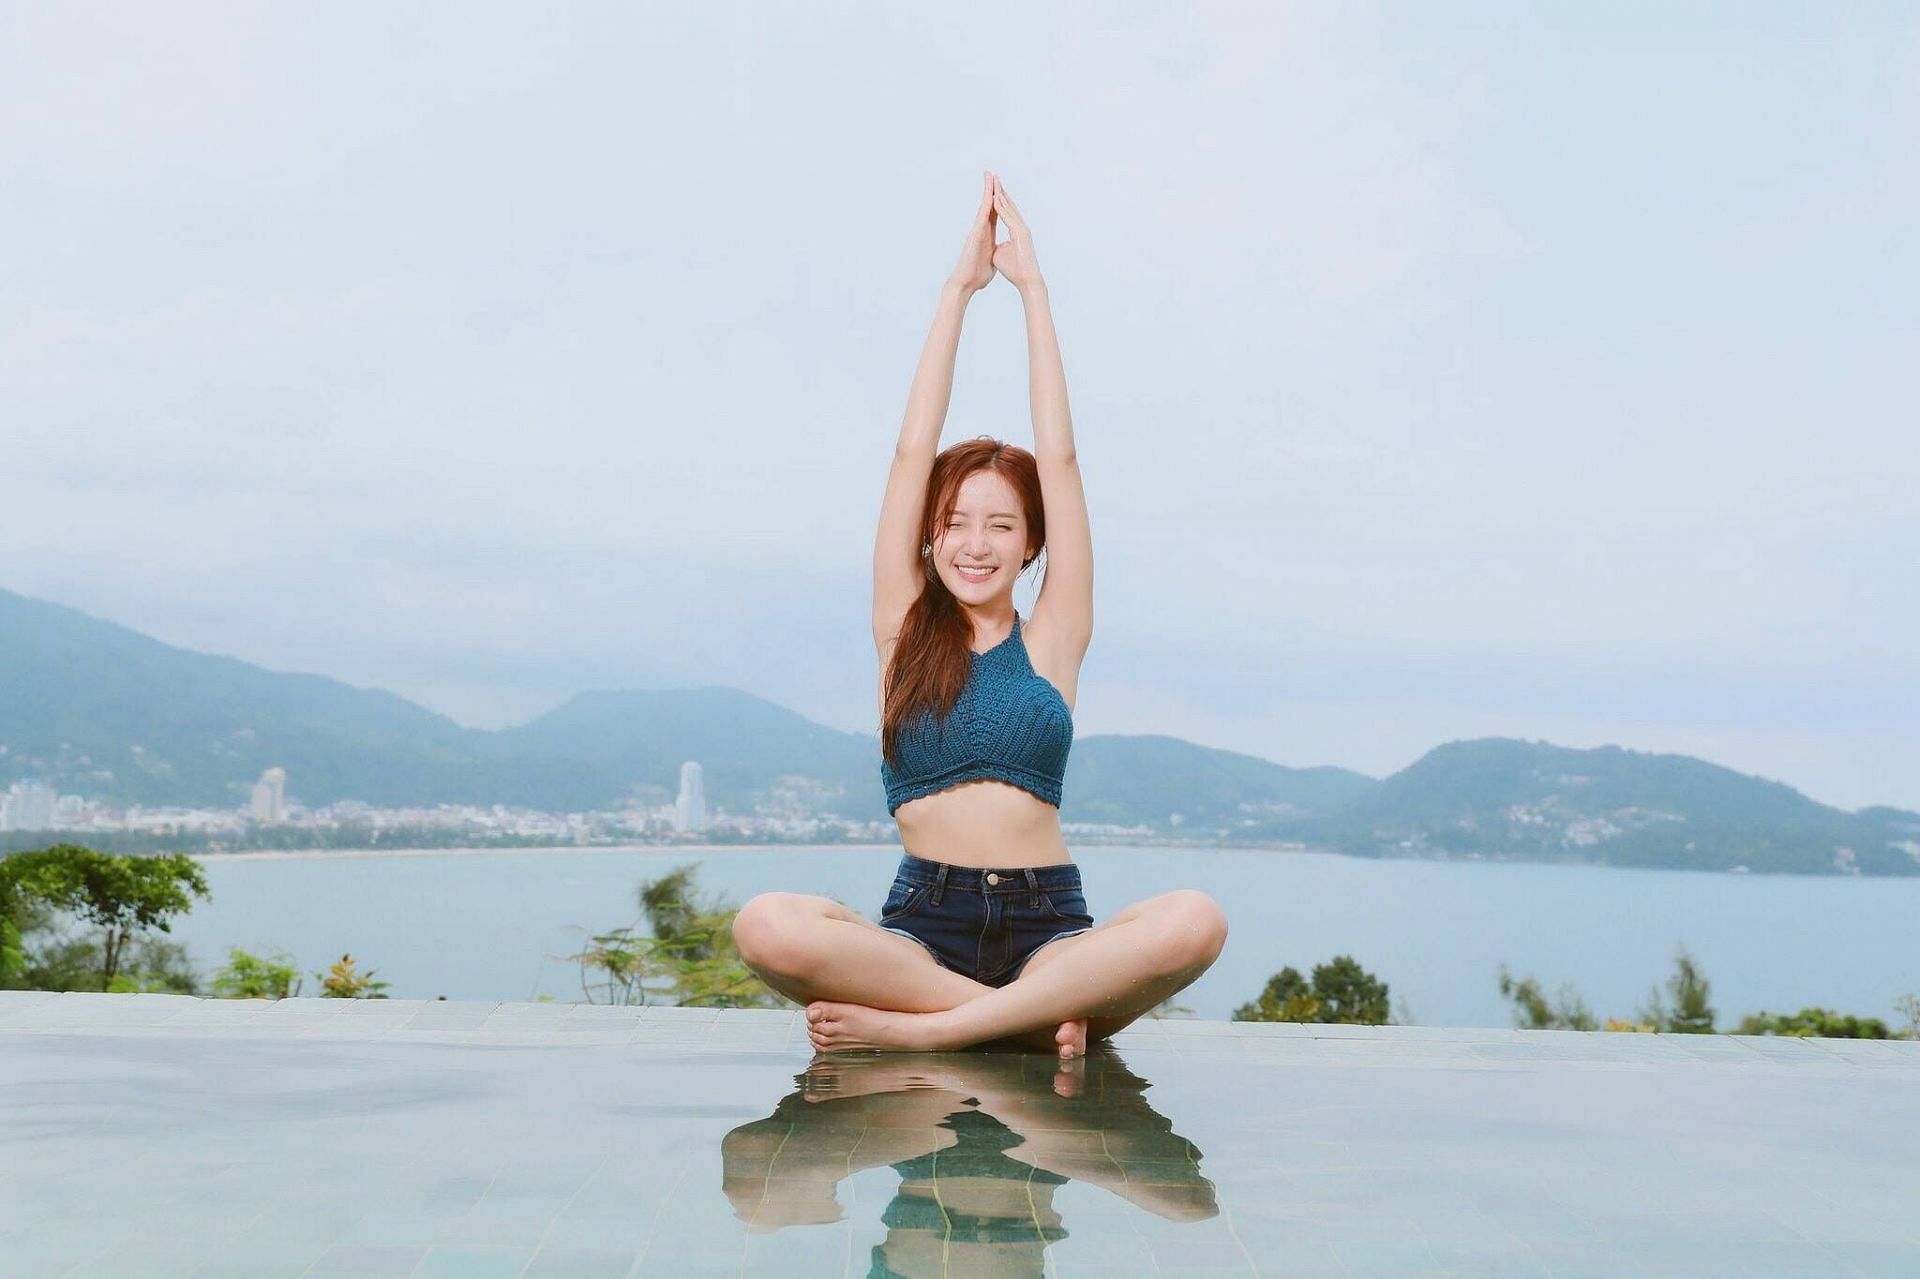 Yoga poses to lift your mood. (Image via Pexels/Pixabay)